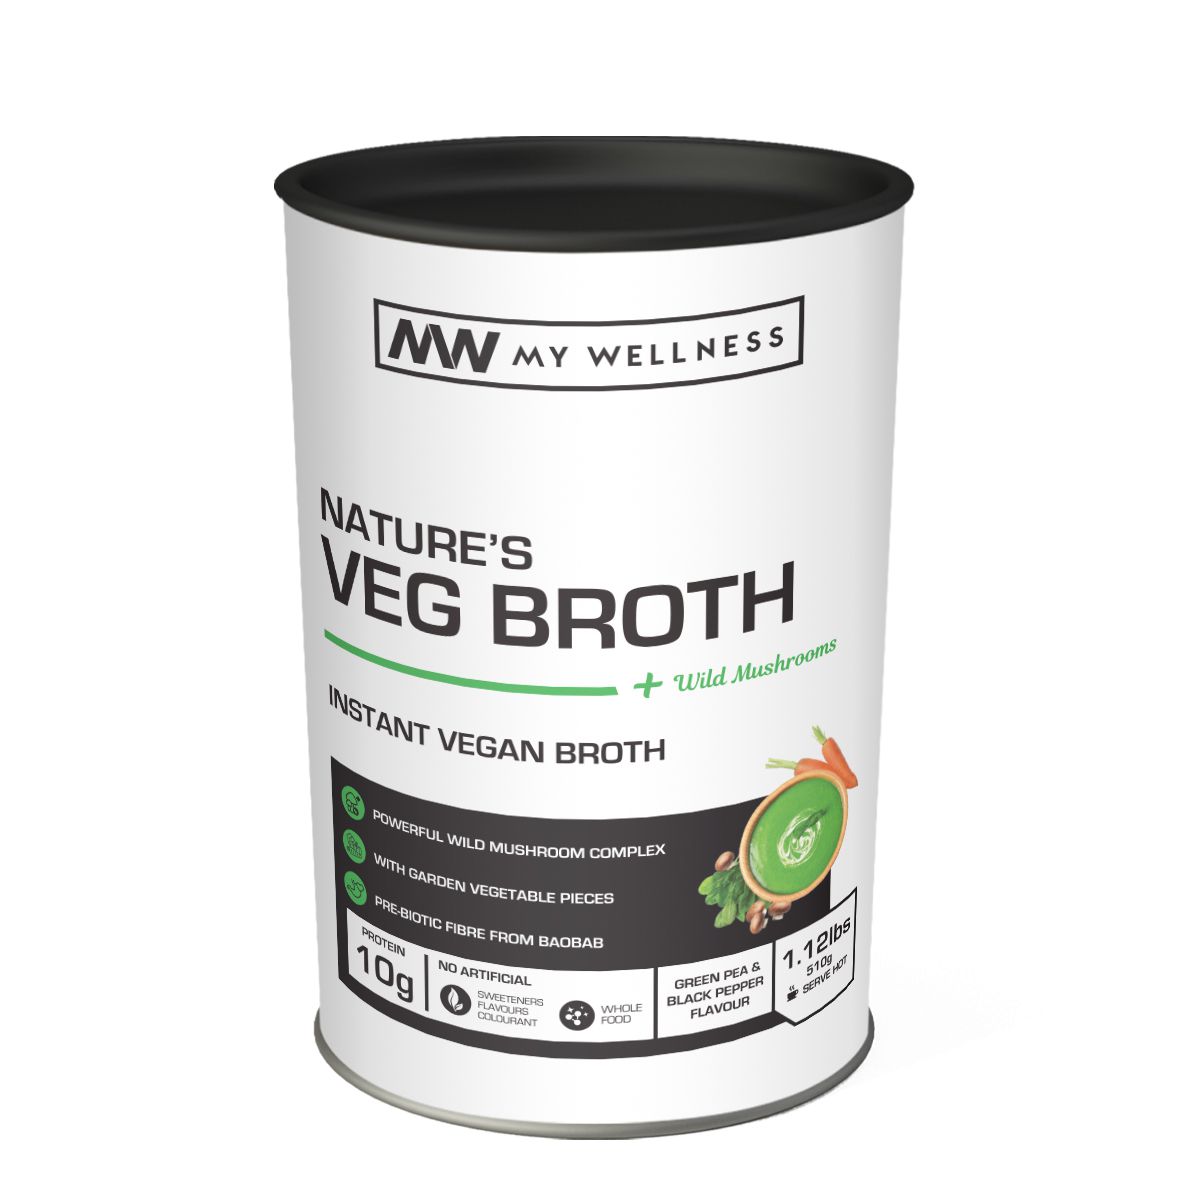 My Wellness - Natures Veg Broth 510g - Pea and Black Pepper